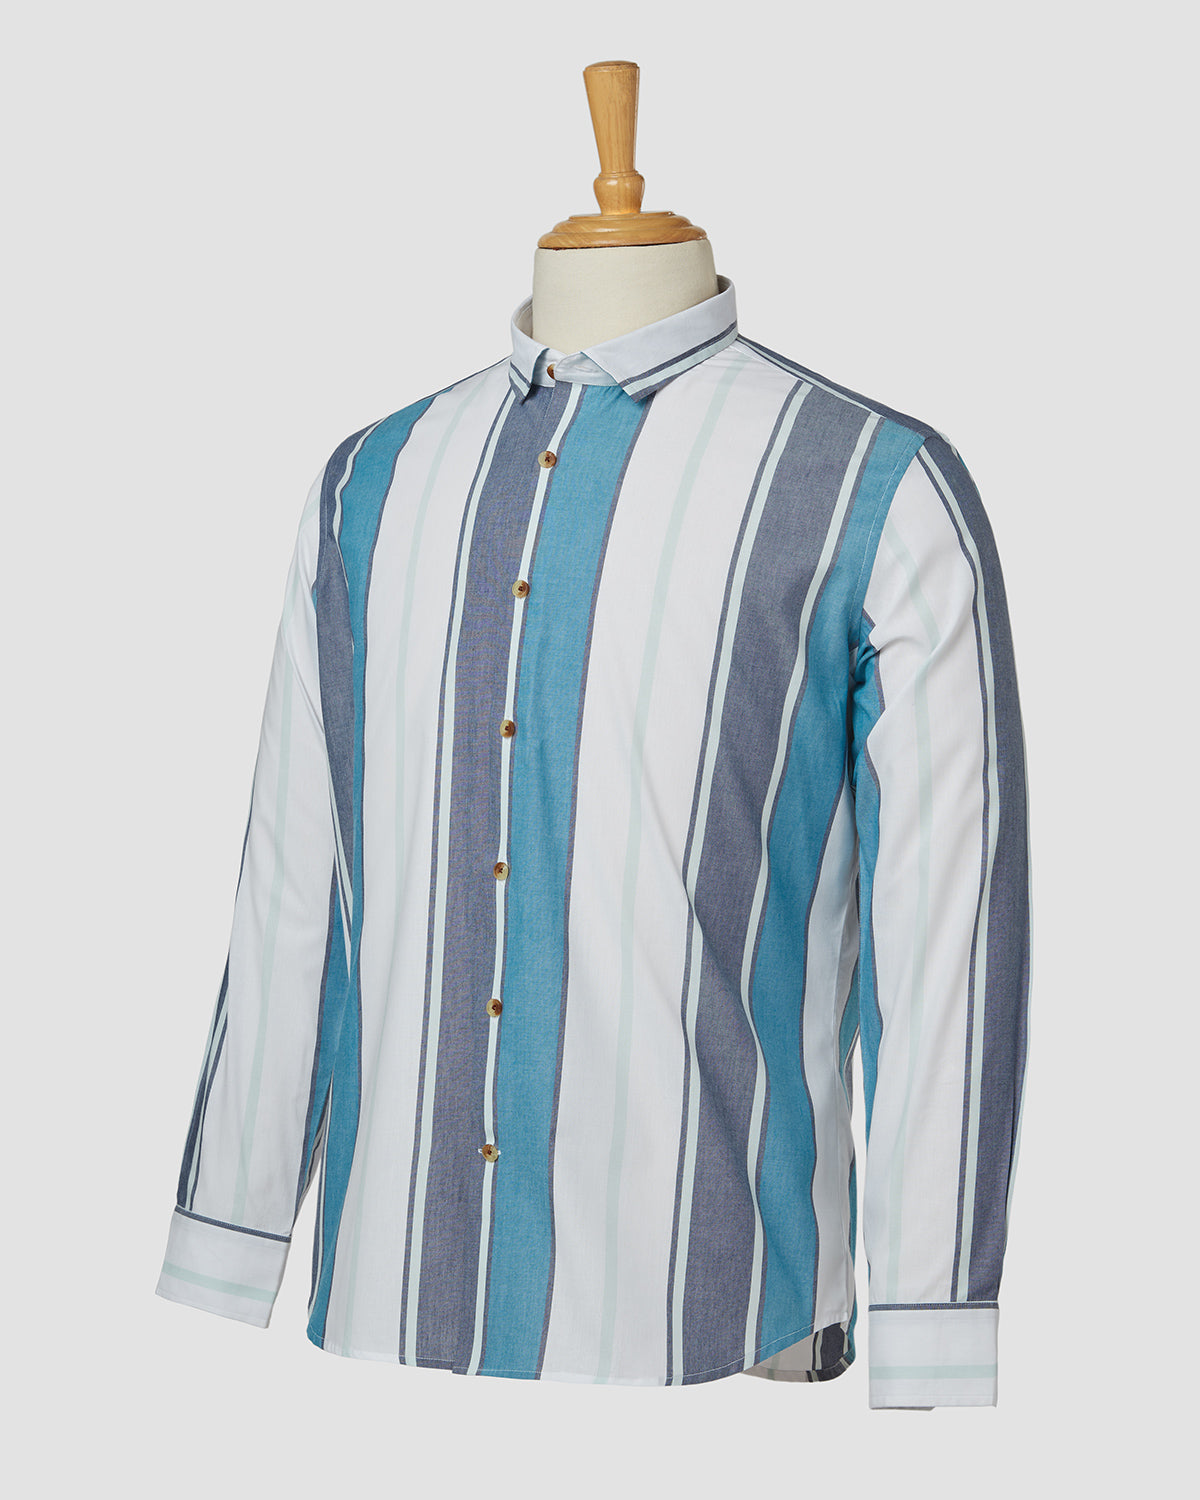 Bombay Shirt Company - Blue Channel Striped Shirt